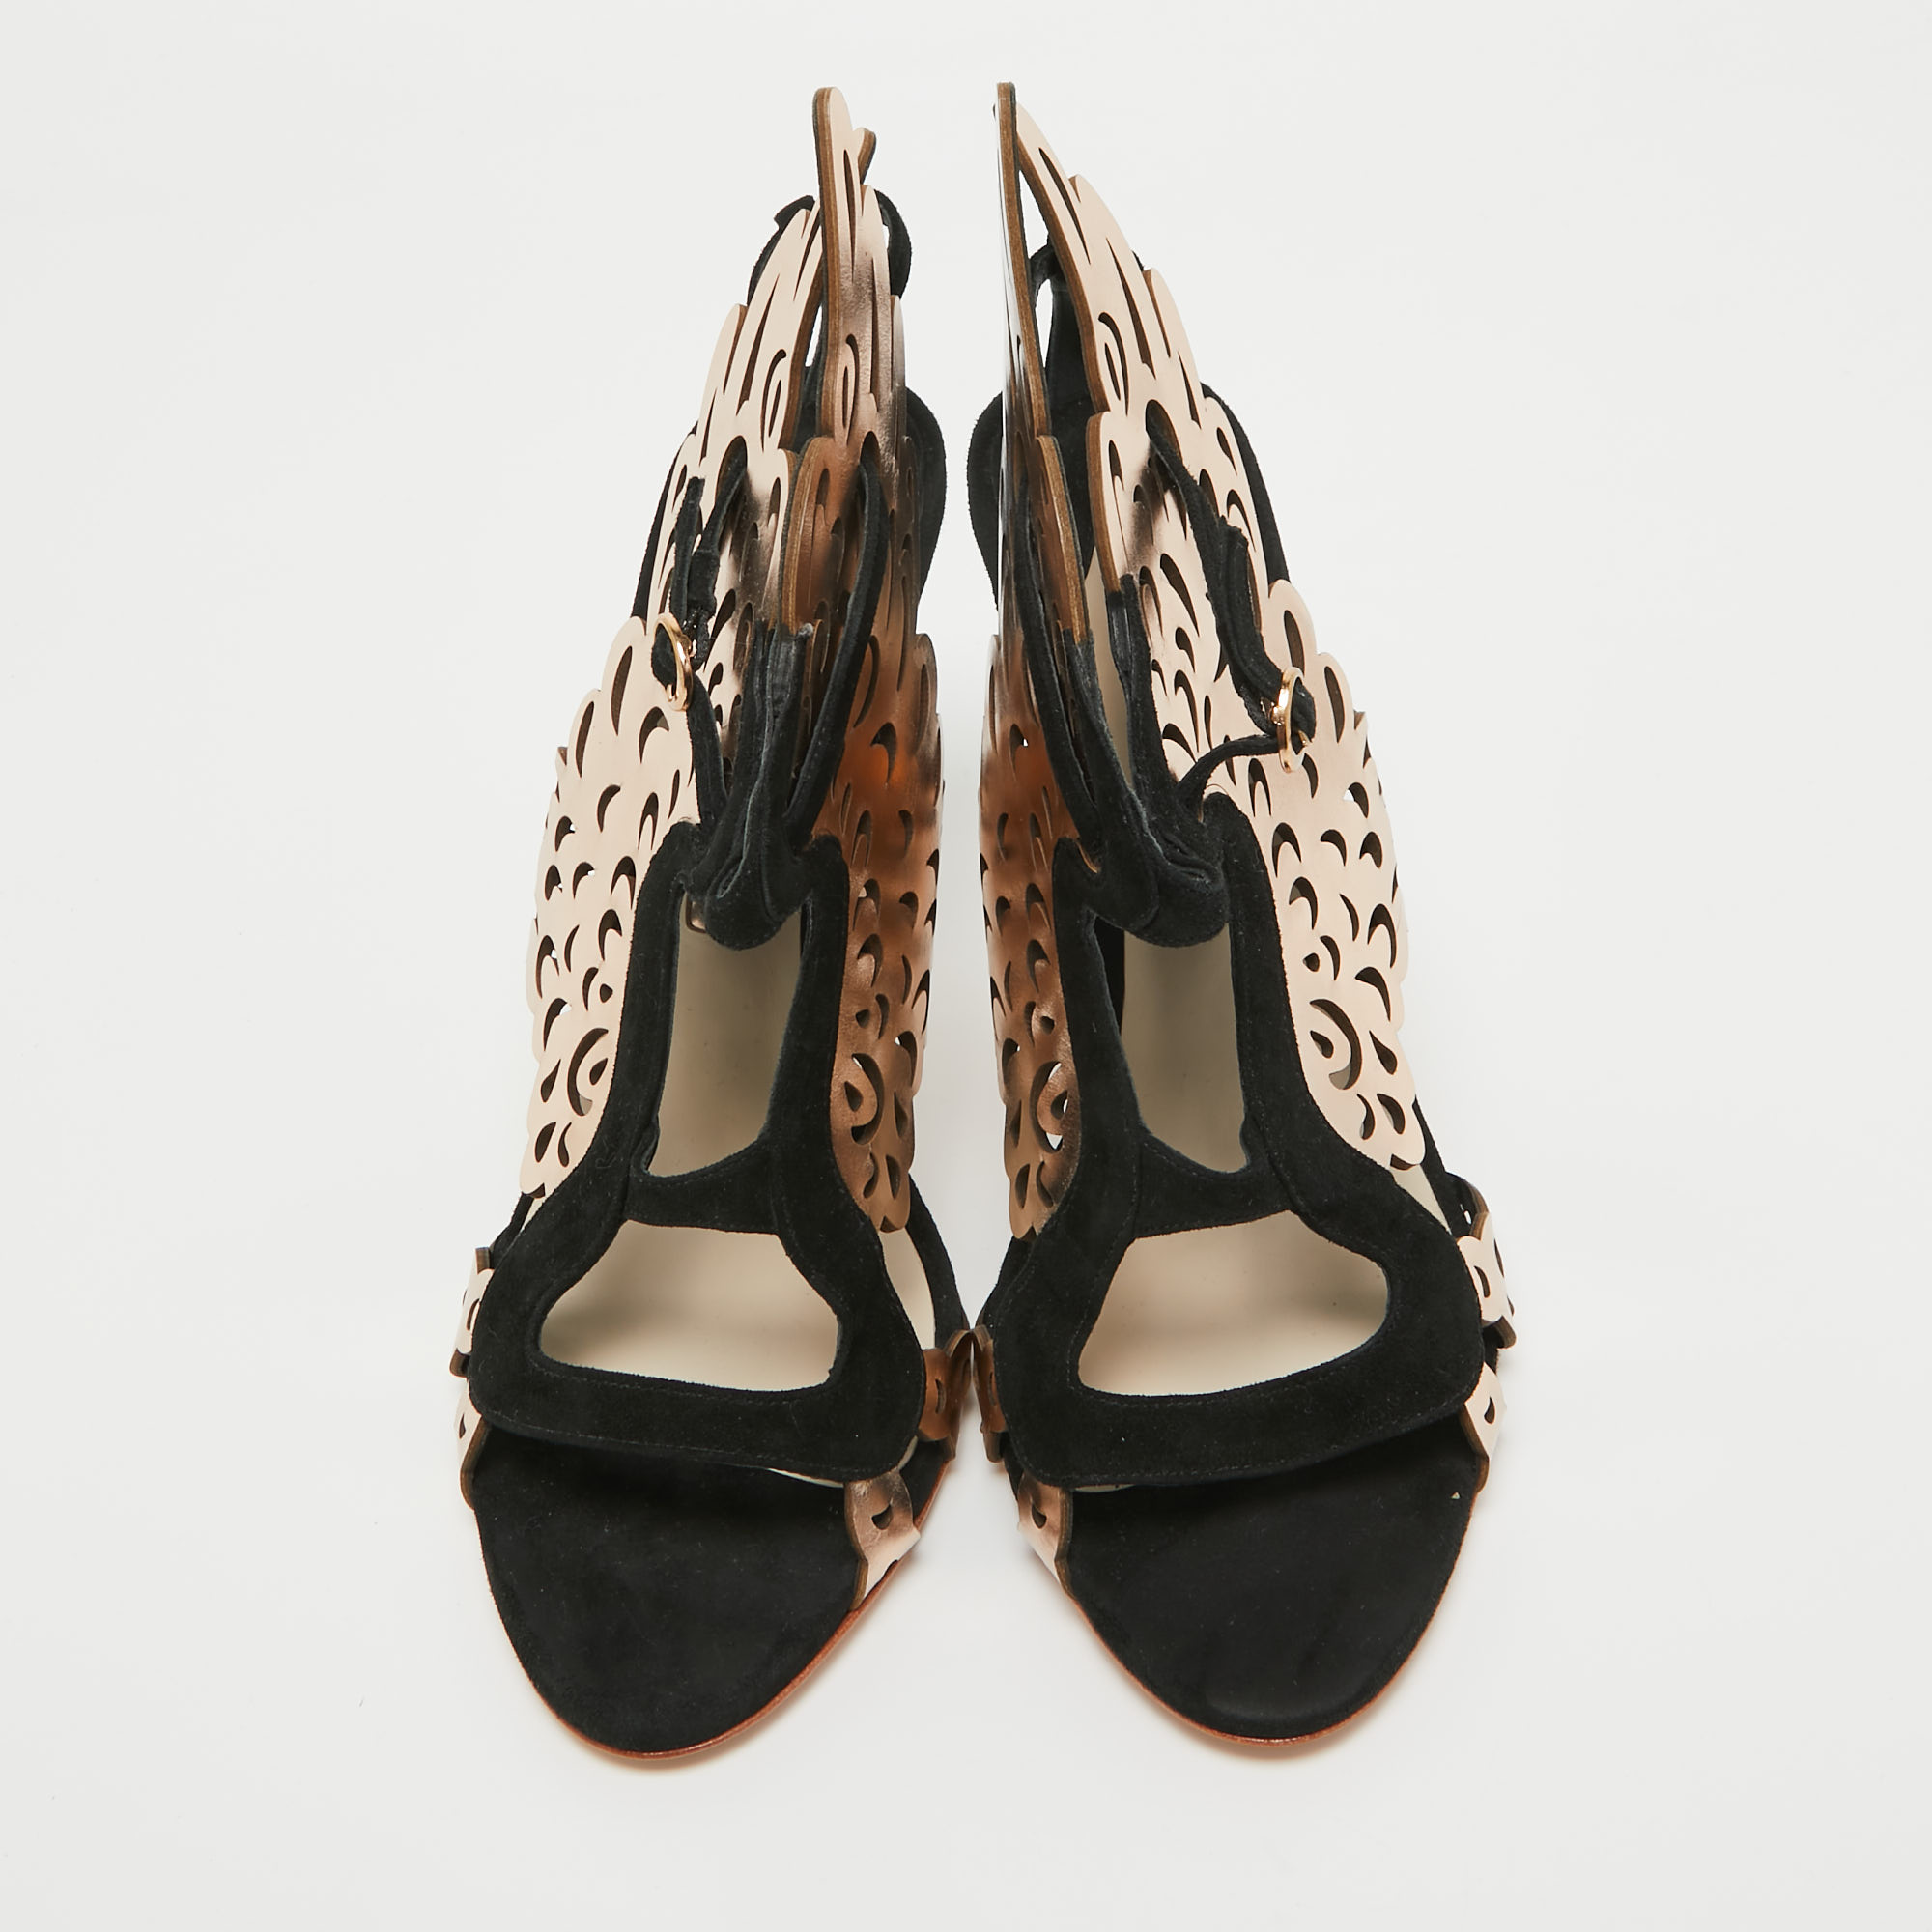 Sophia Webster Black/Rose Gold Suede And Leather Parisa Sandals Size 40